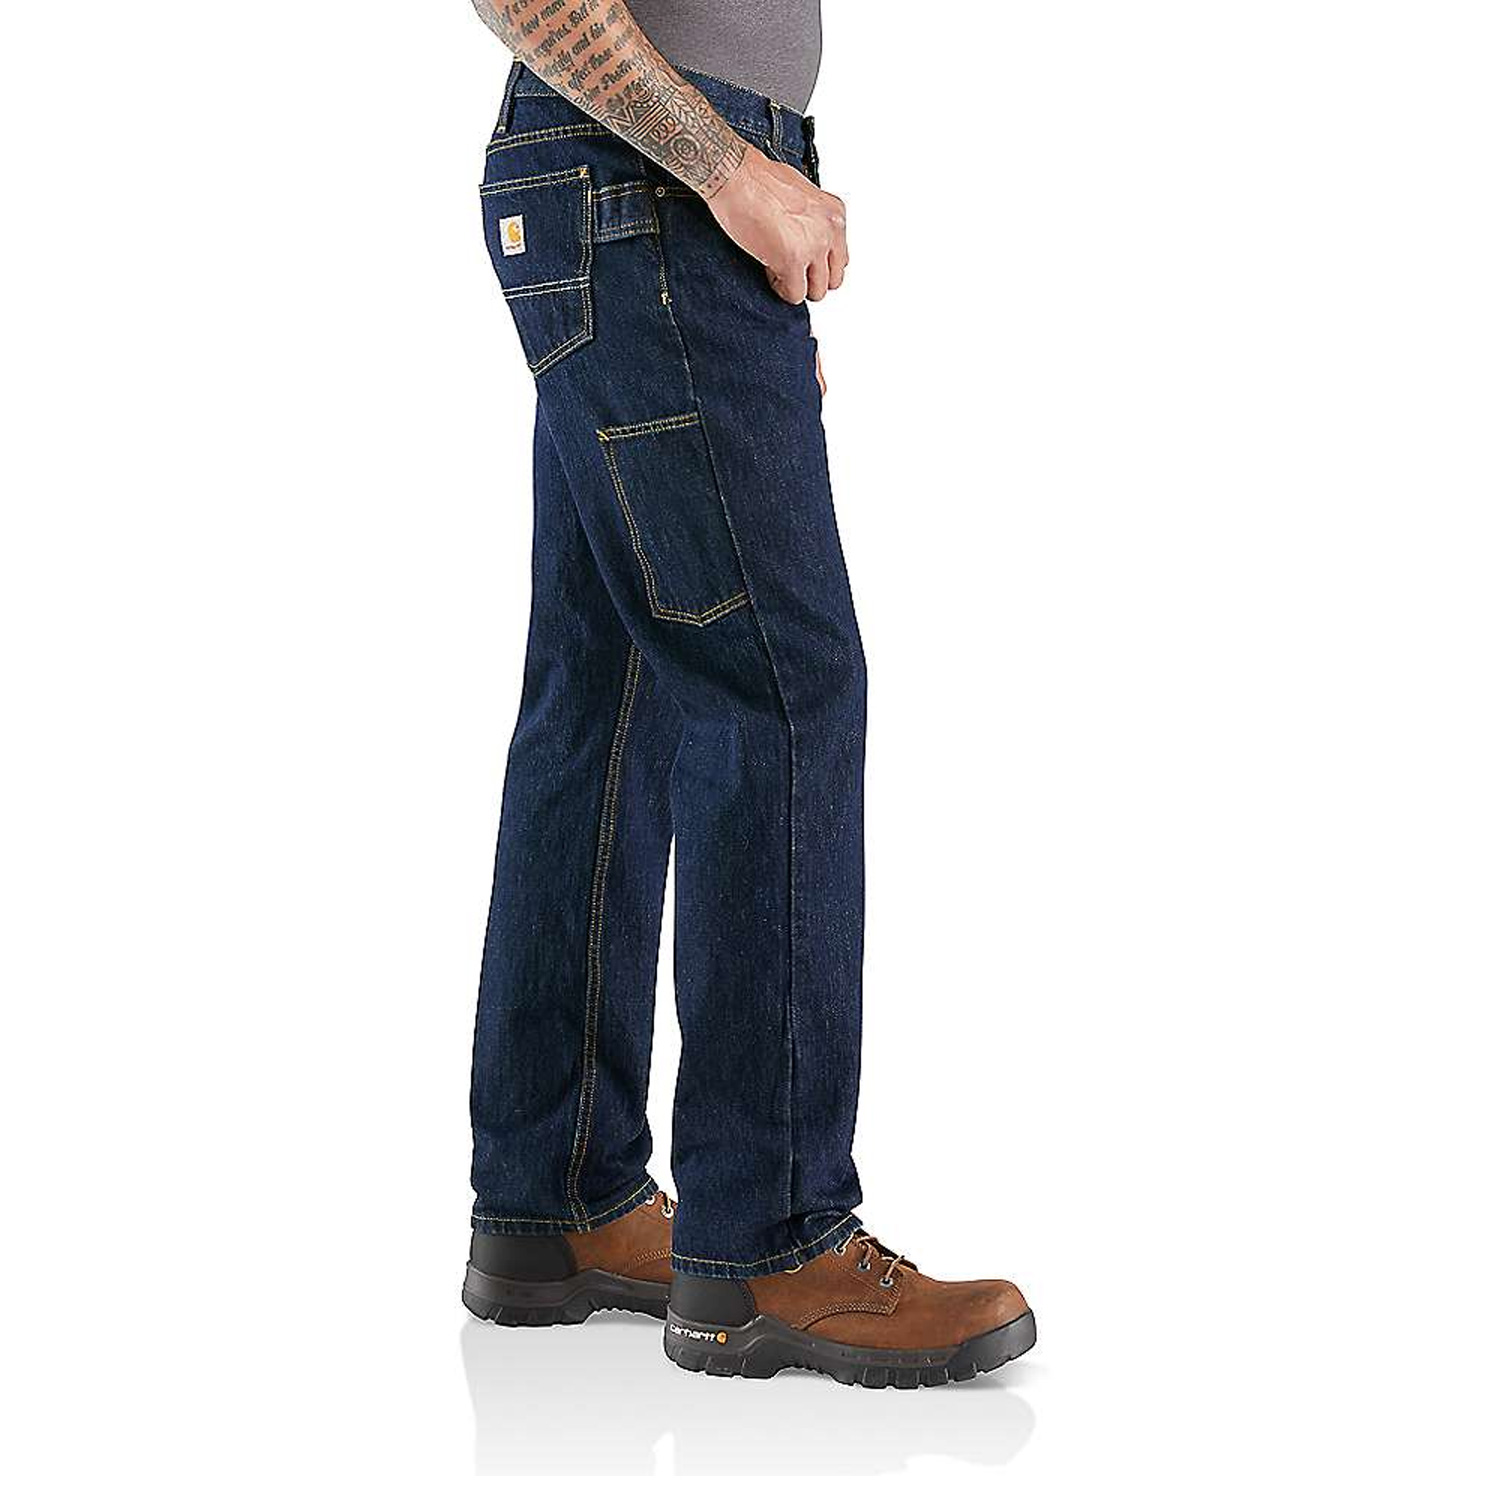 Carhartt Rugged Flex Relaxed Fit Heavyweight 5-Pocket Jeans